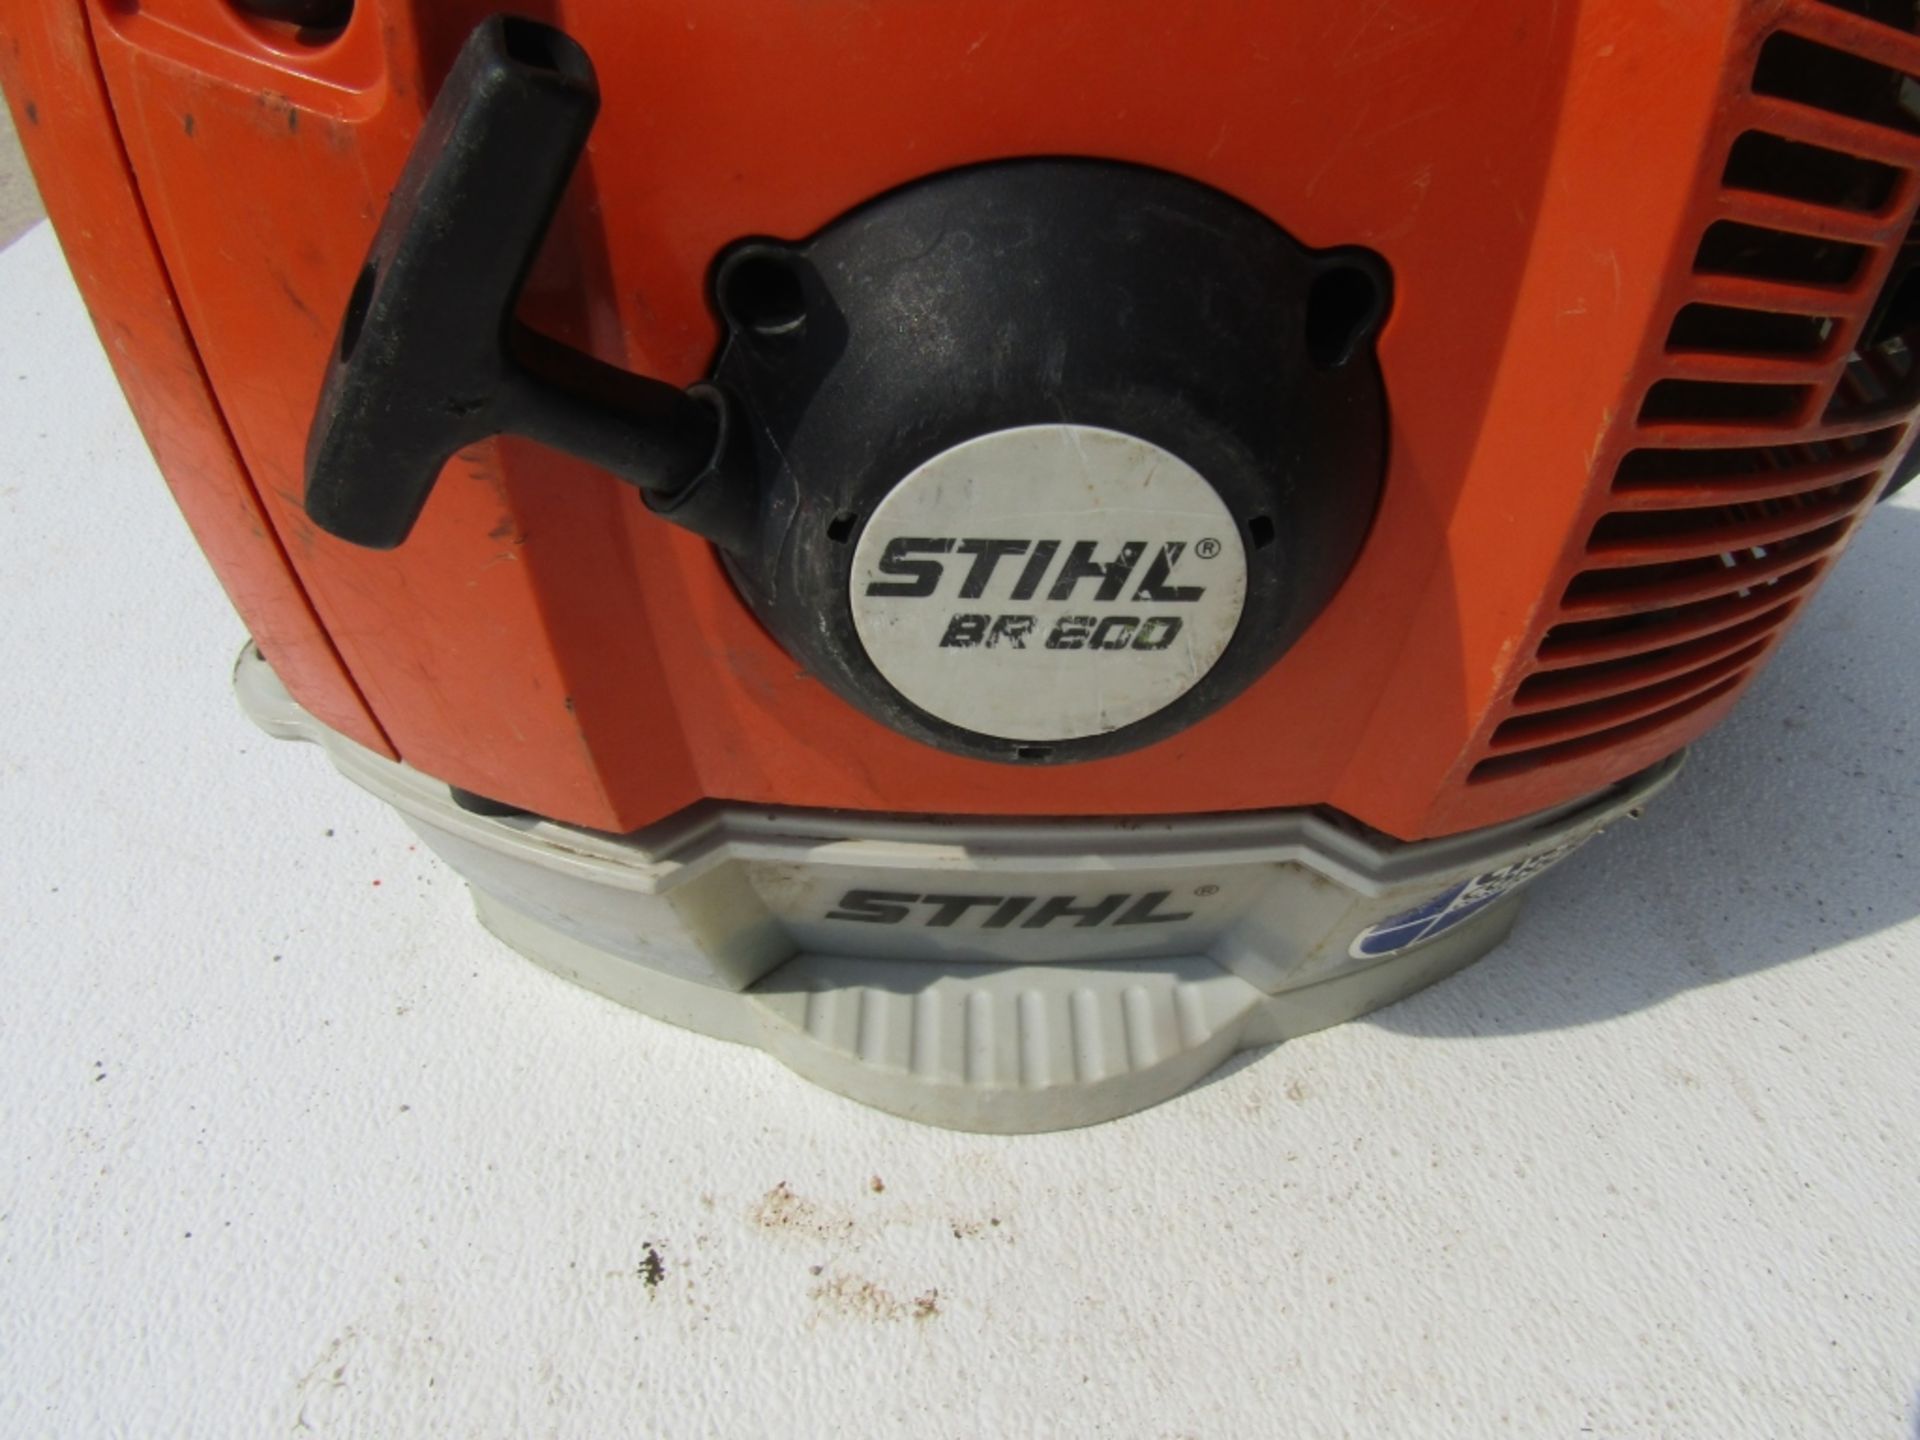 Stihl BR 600 Blower - Image 2 of 2